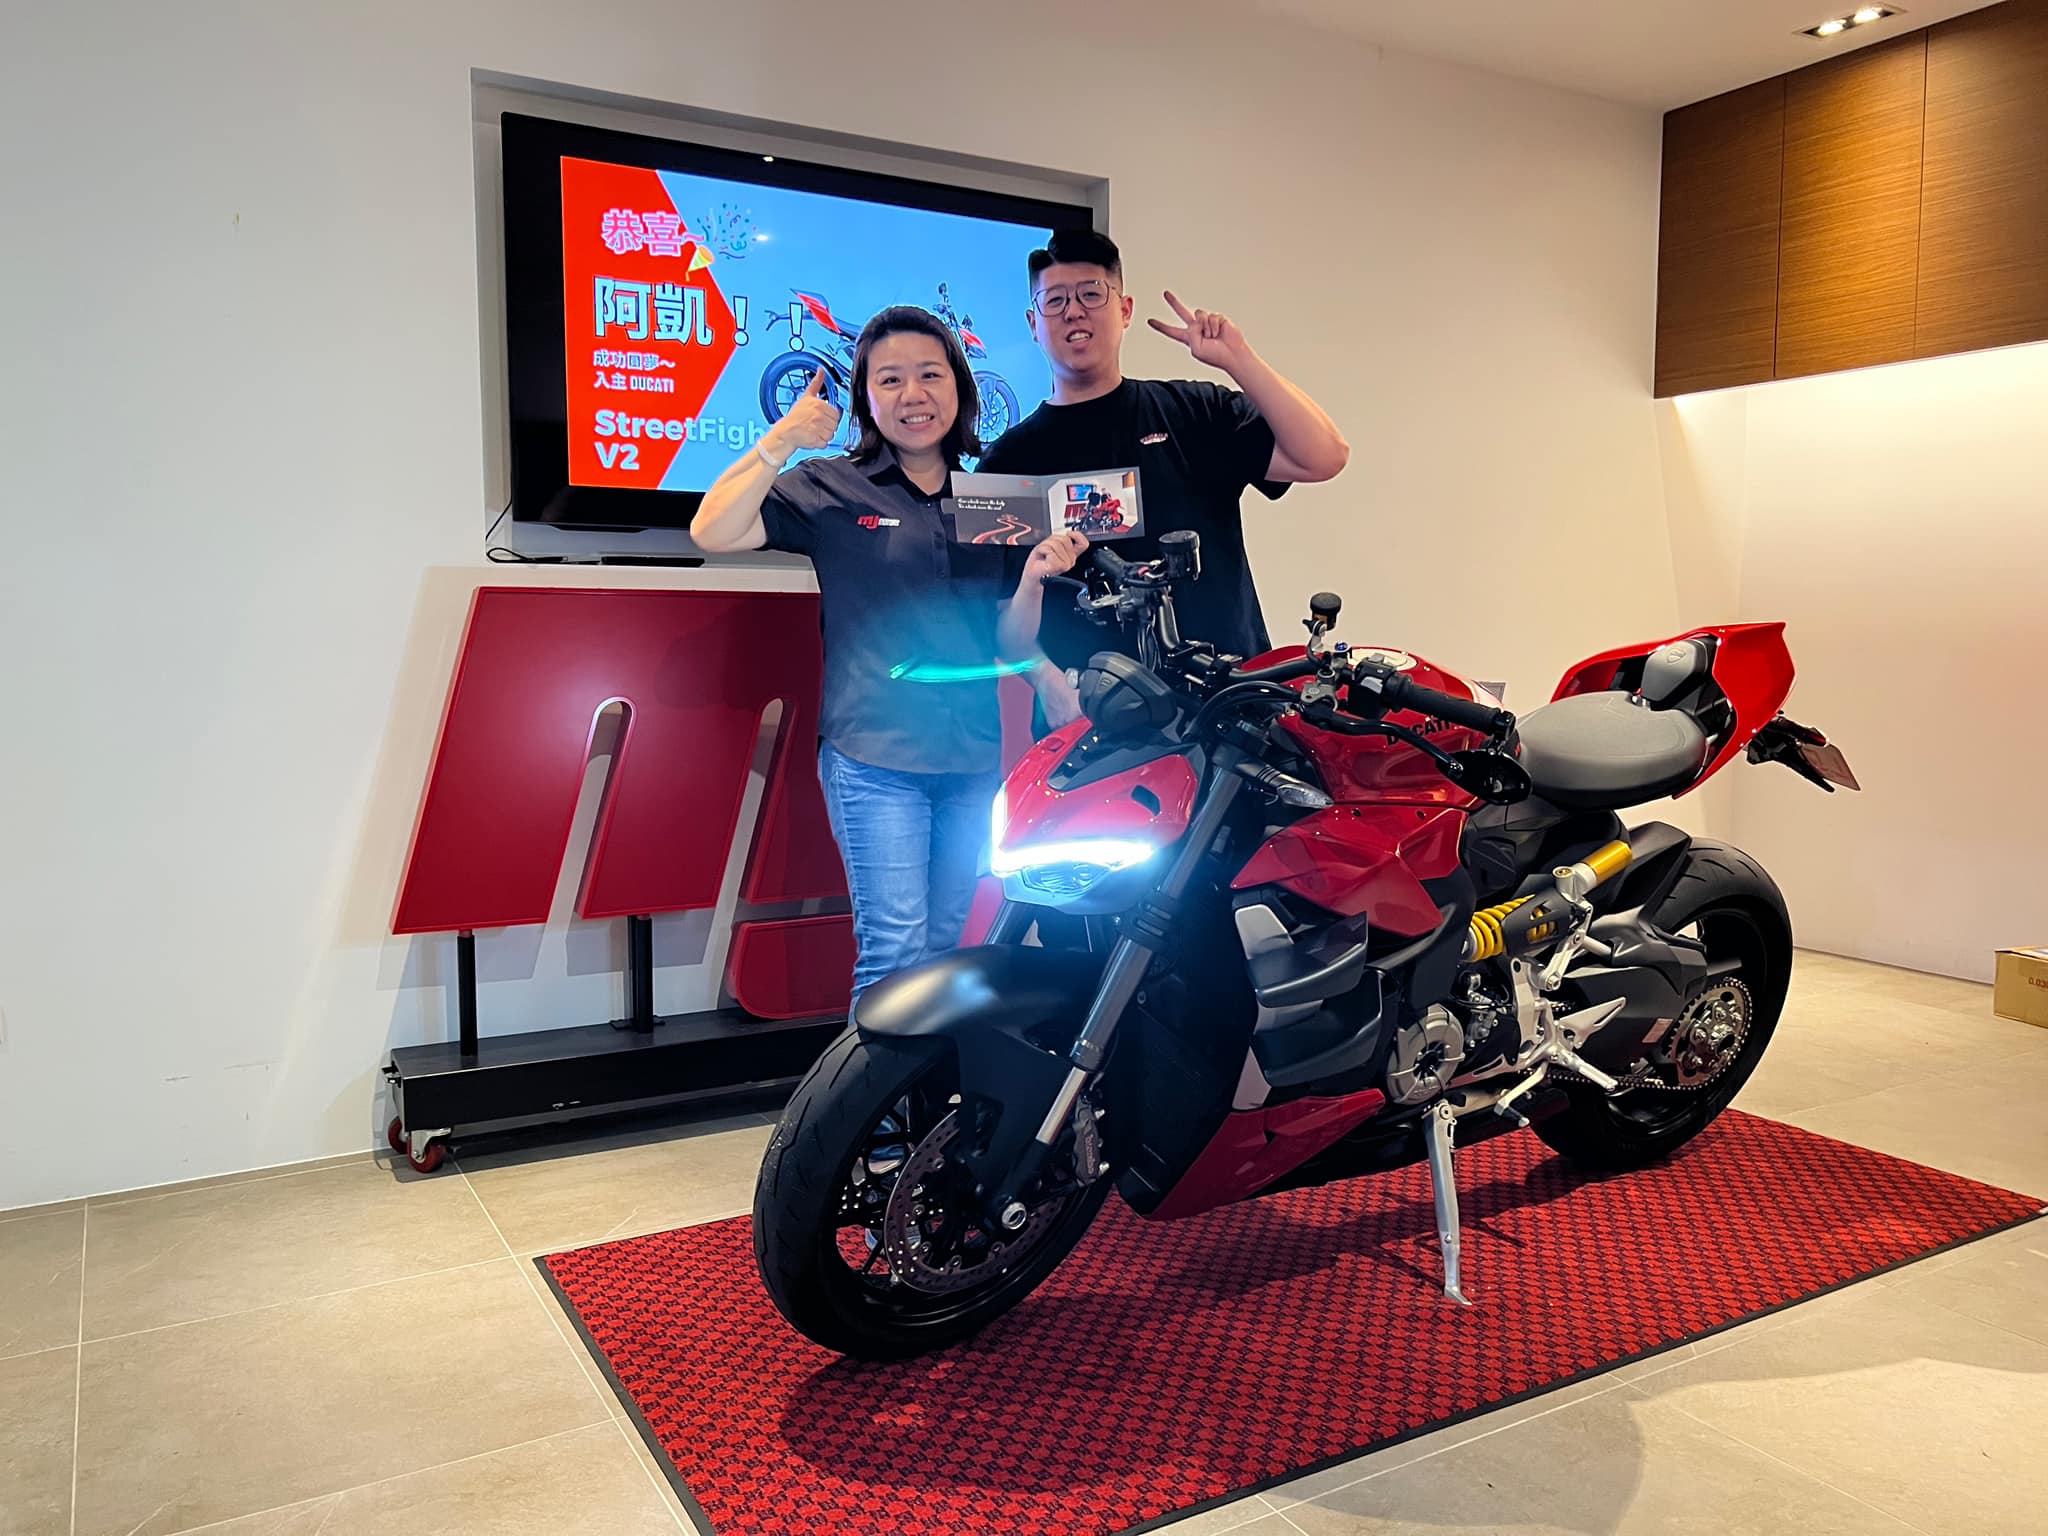 DUCATI STREETFIGHTER新車出售中 《 康妮賀交車 》恭喜阿凱～成功晉級！Ducati Street Fighter V2入手重機界的法拉利 這是對自己肯定 | 敏傑車業資深銷售專員 康妮 Connie